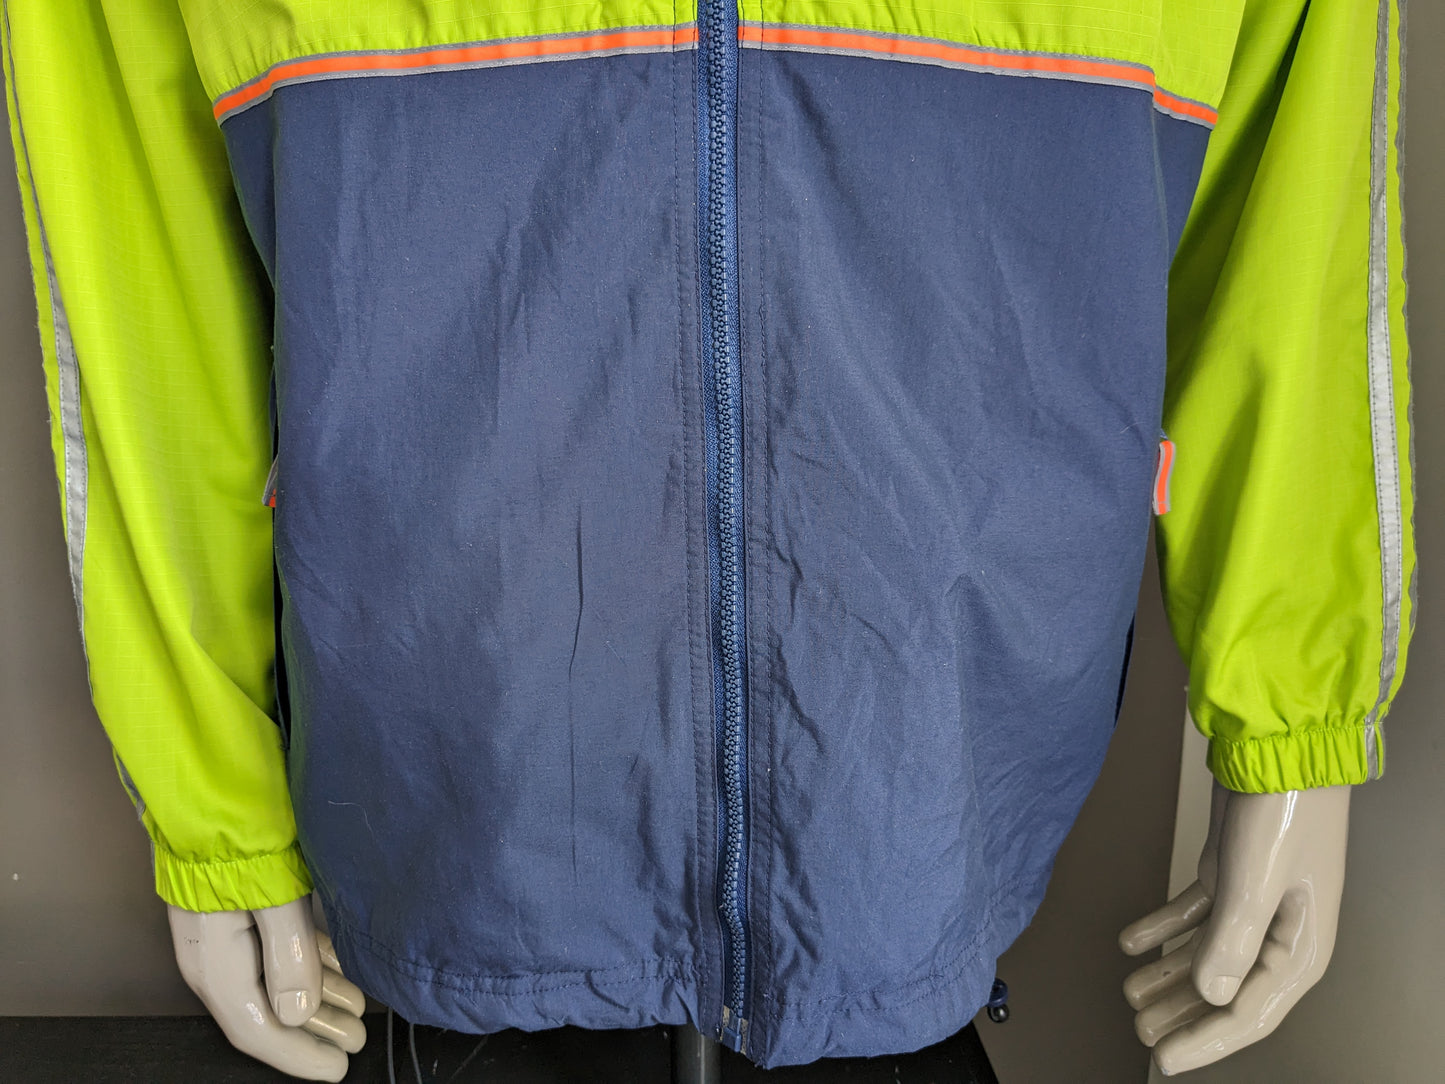 Adidas "Delfi 1000" Jacket / Jack. Yellow blue colored. Size XL.